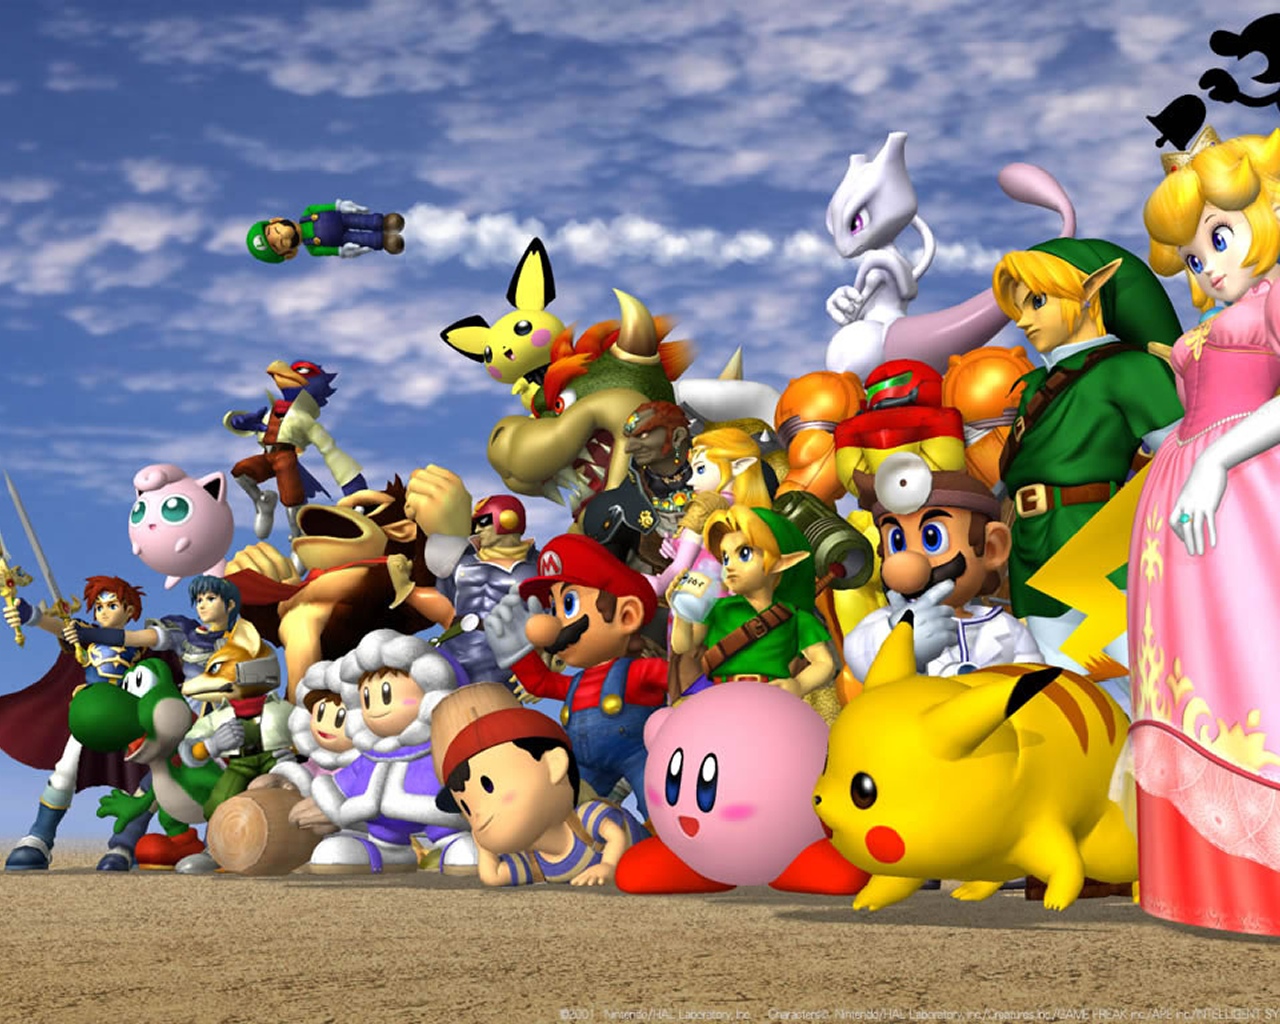 "Super Smash Bros. Melee" desktop wallpaper (1280 x 1024 pixels)